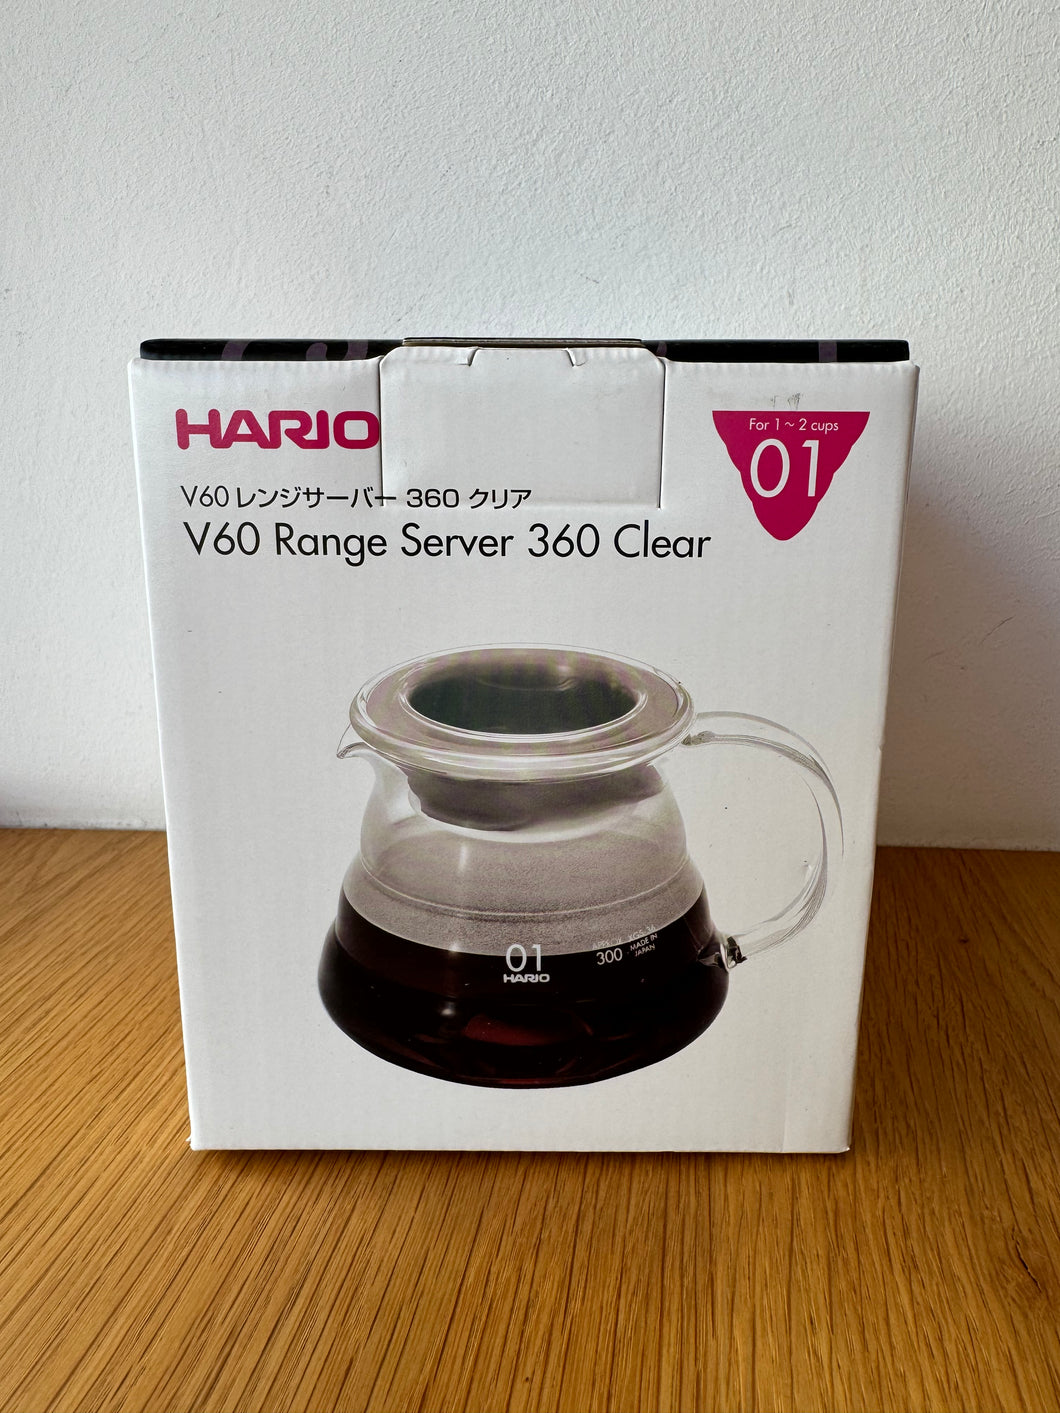 HARIO Range Server V60 360 Clear